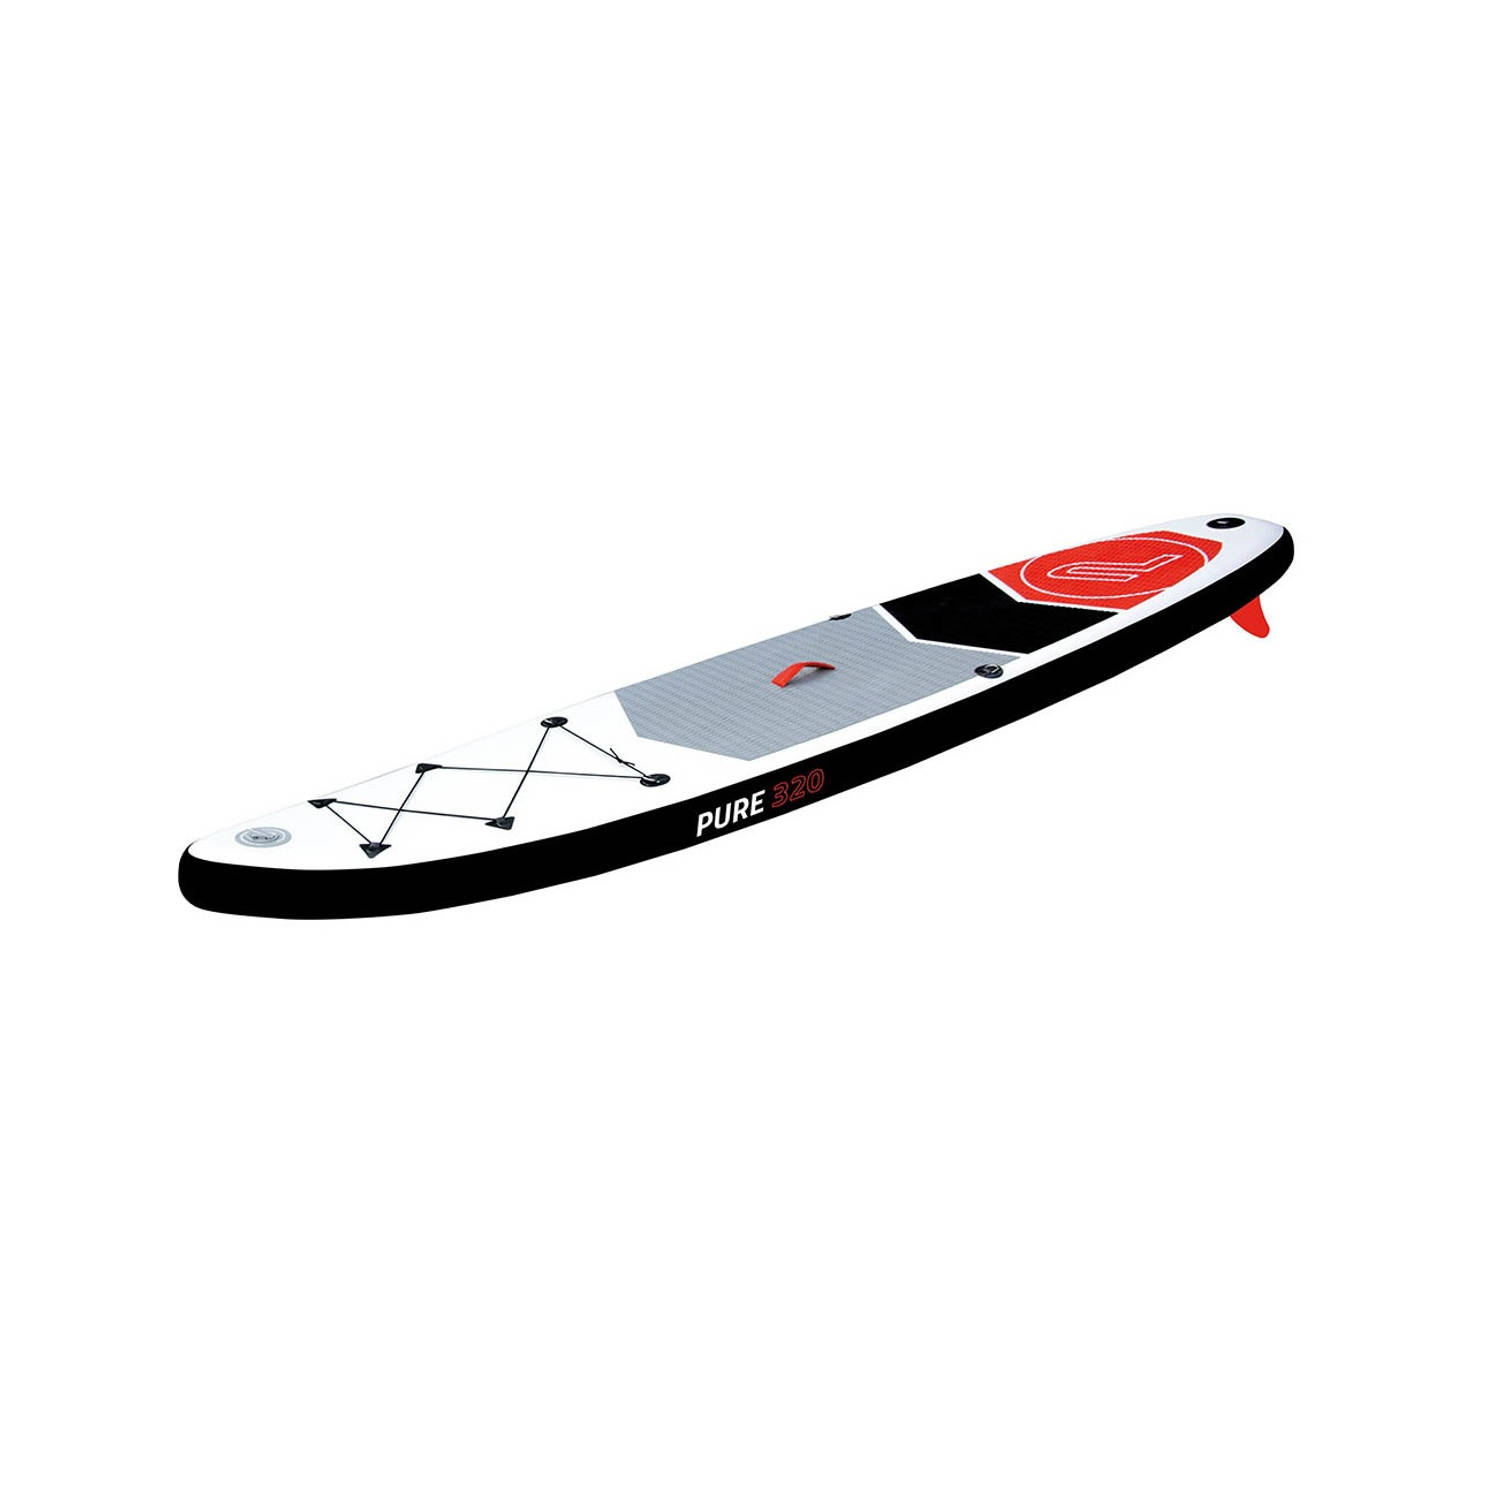 Relaxwonen Sup 320cm versie Opblaasbare Stand up Paddle Board (SUP-board) maximale belasting 150KG